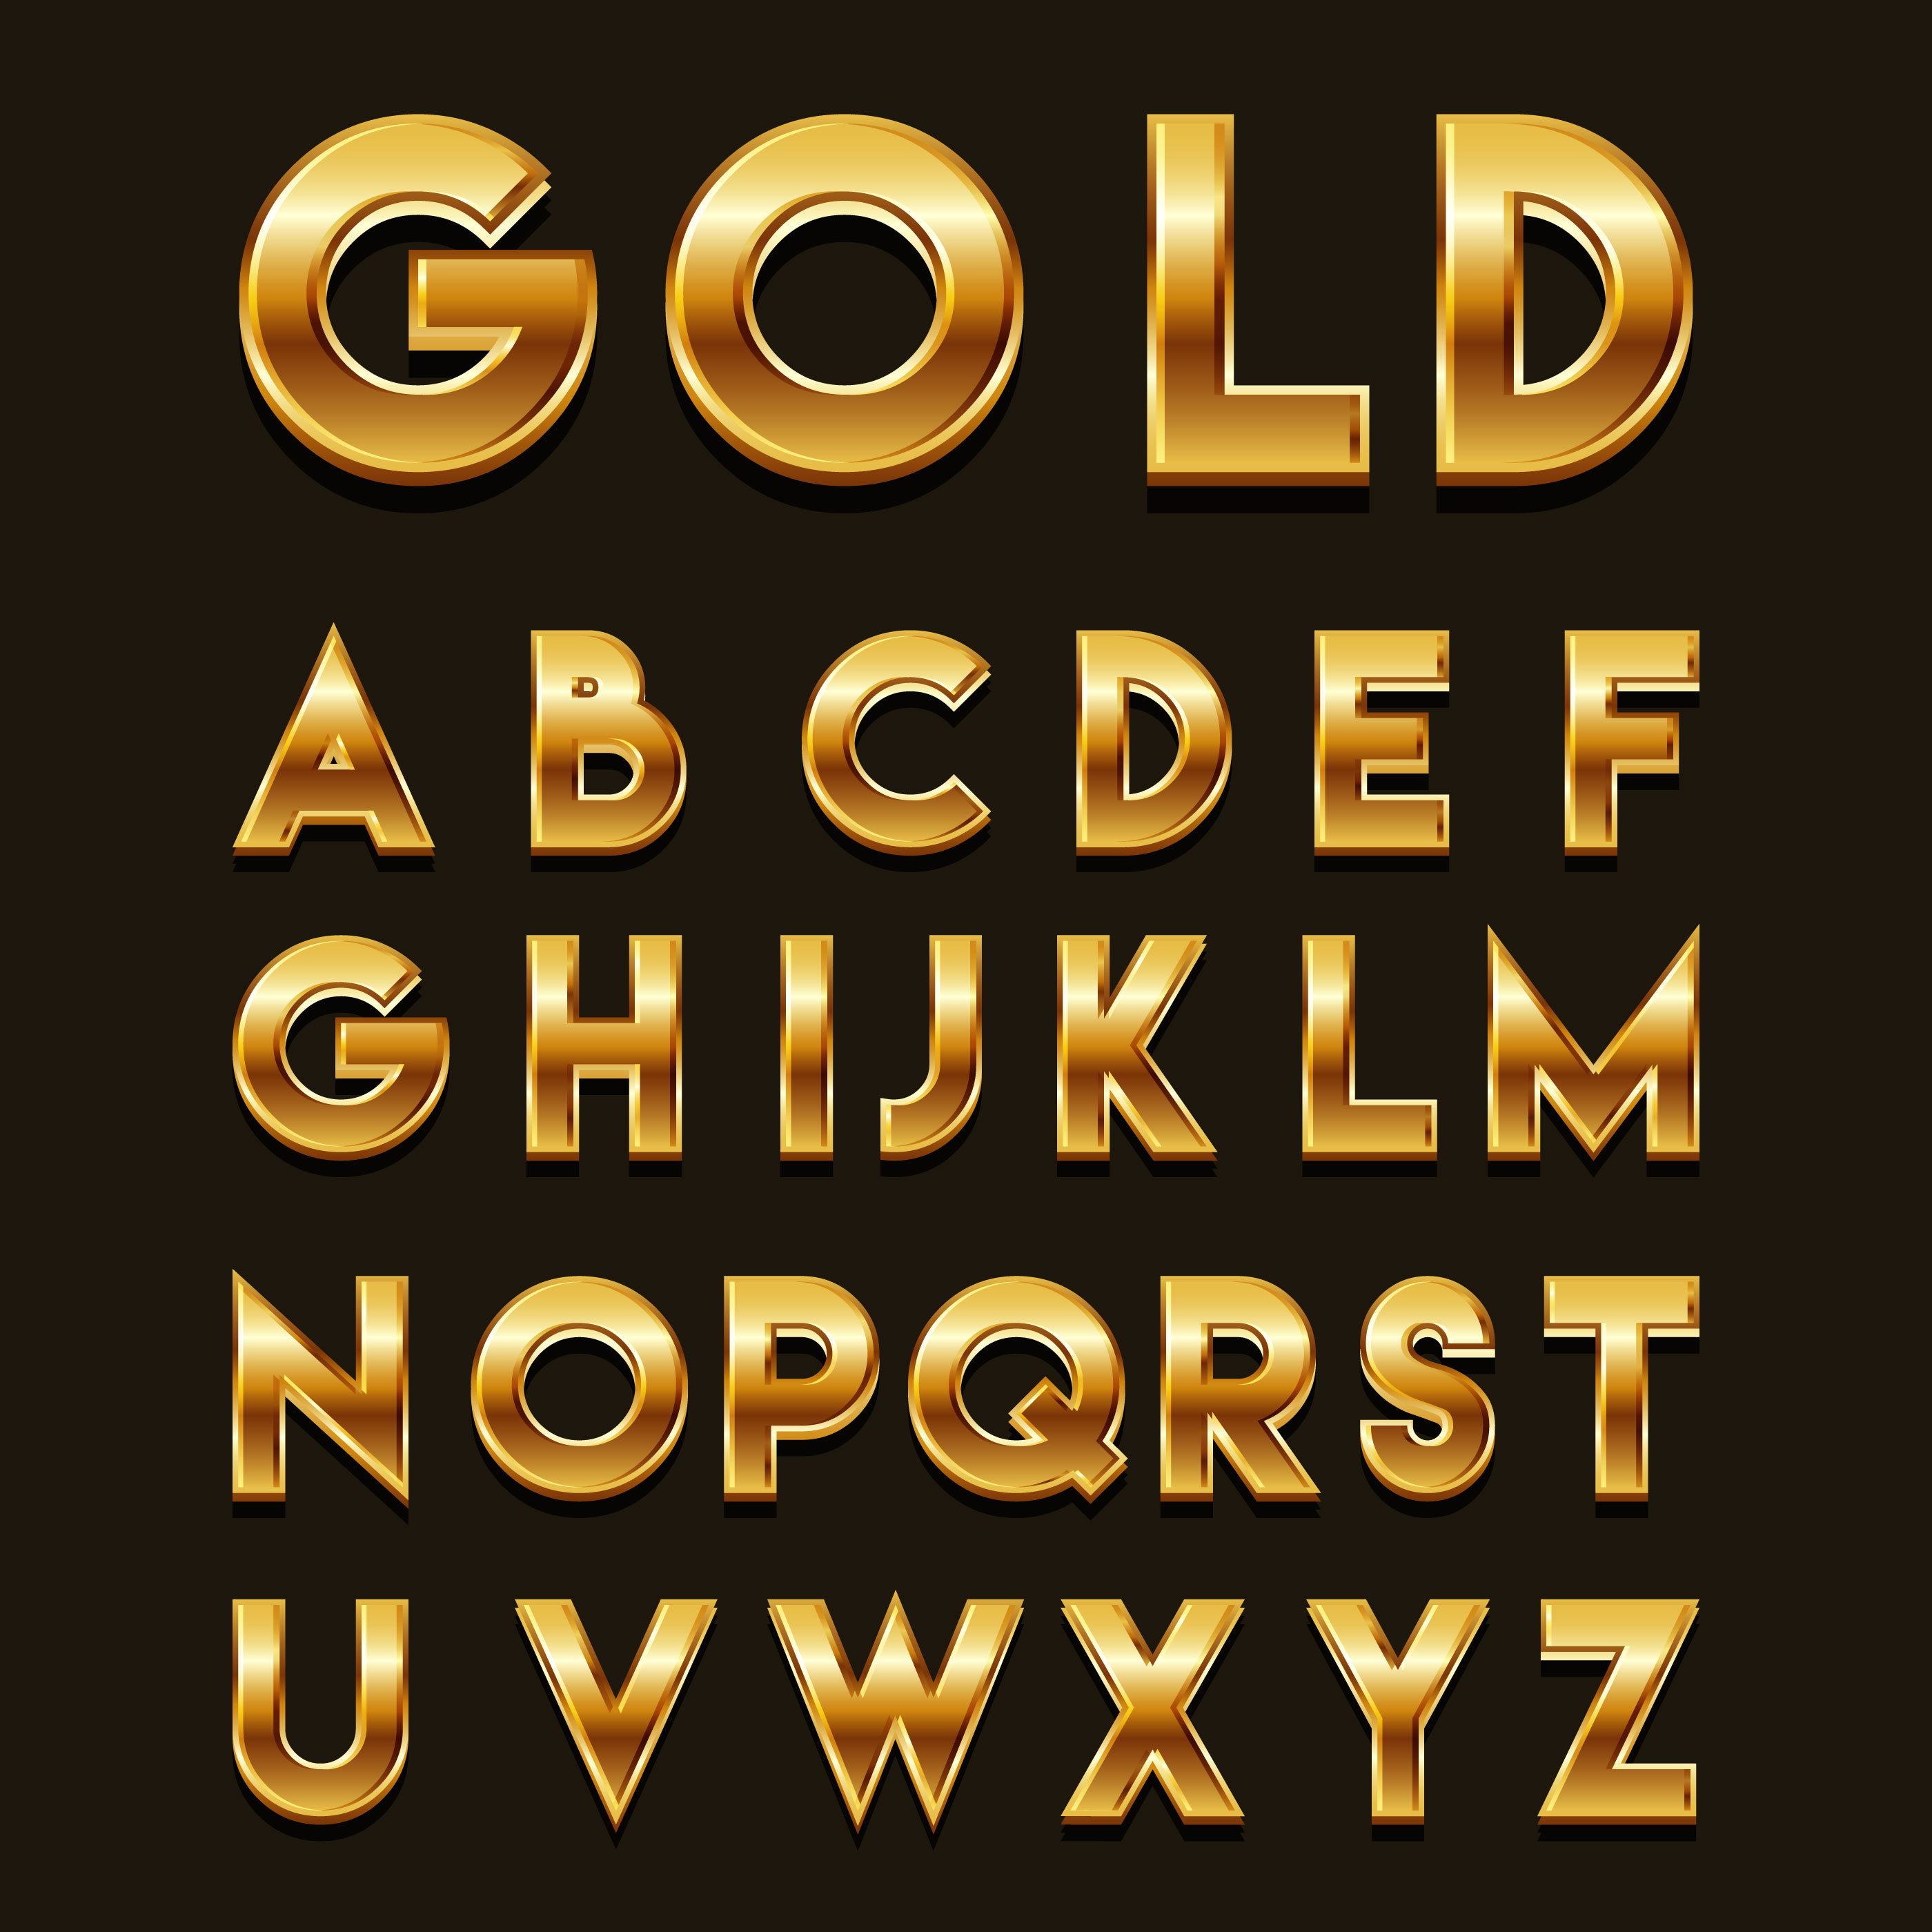 Golden plains font download